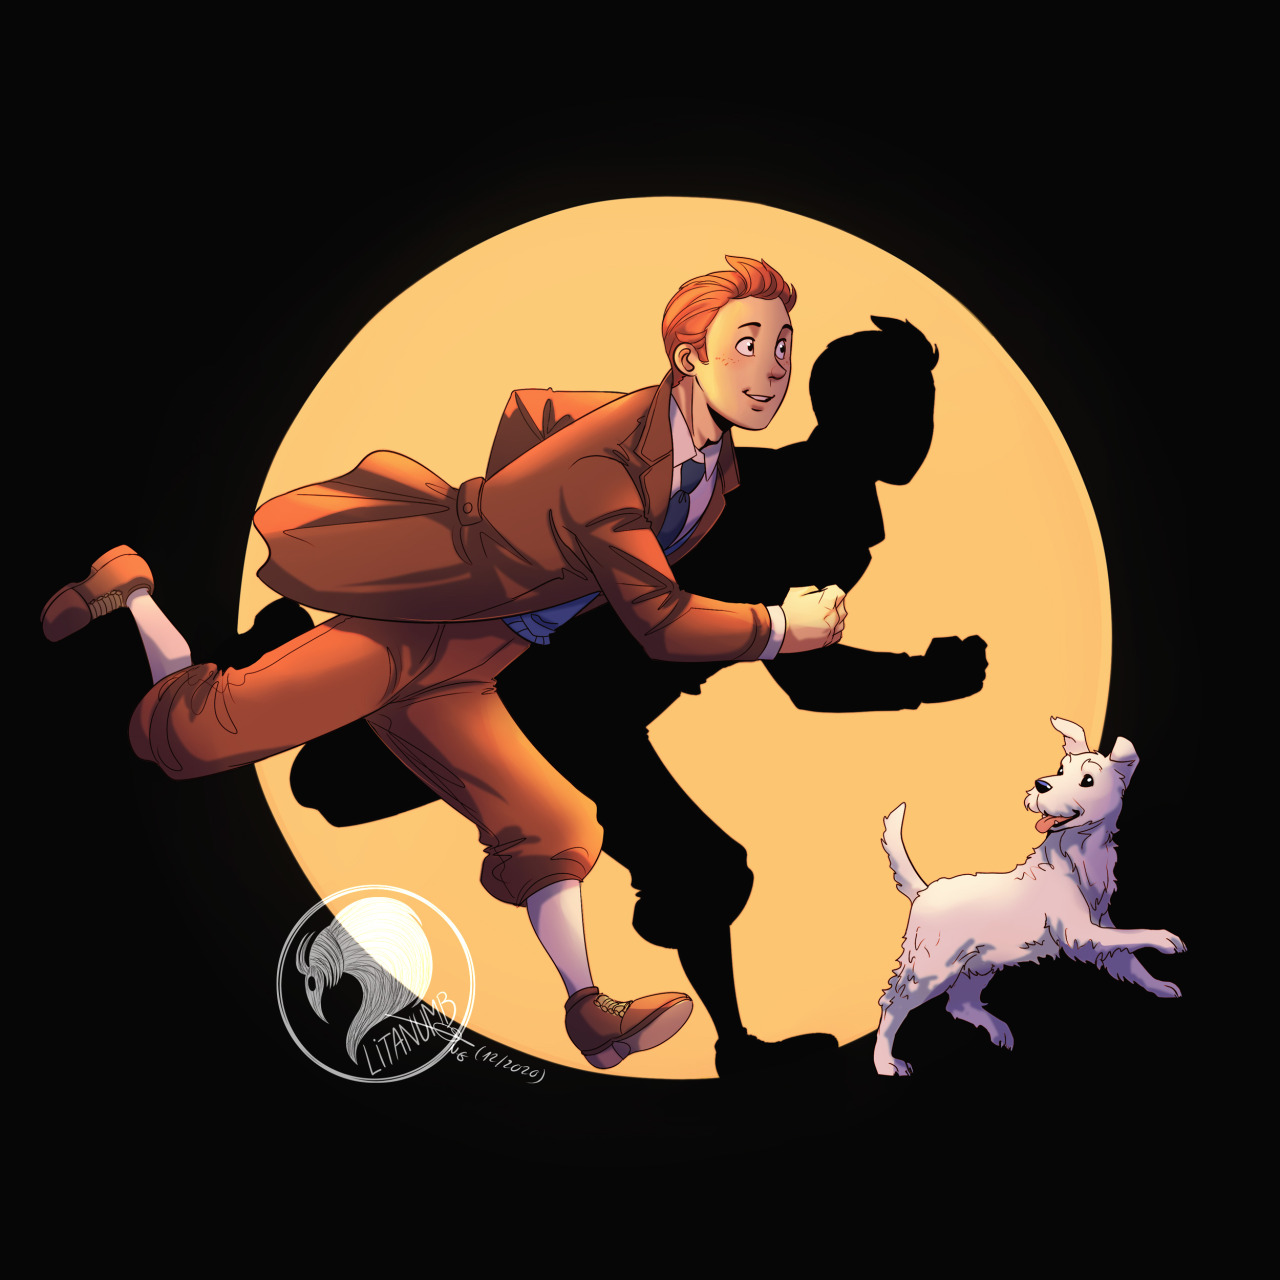 Art — Tintin fanarts! Instagram account